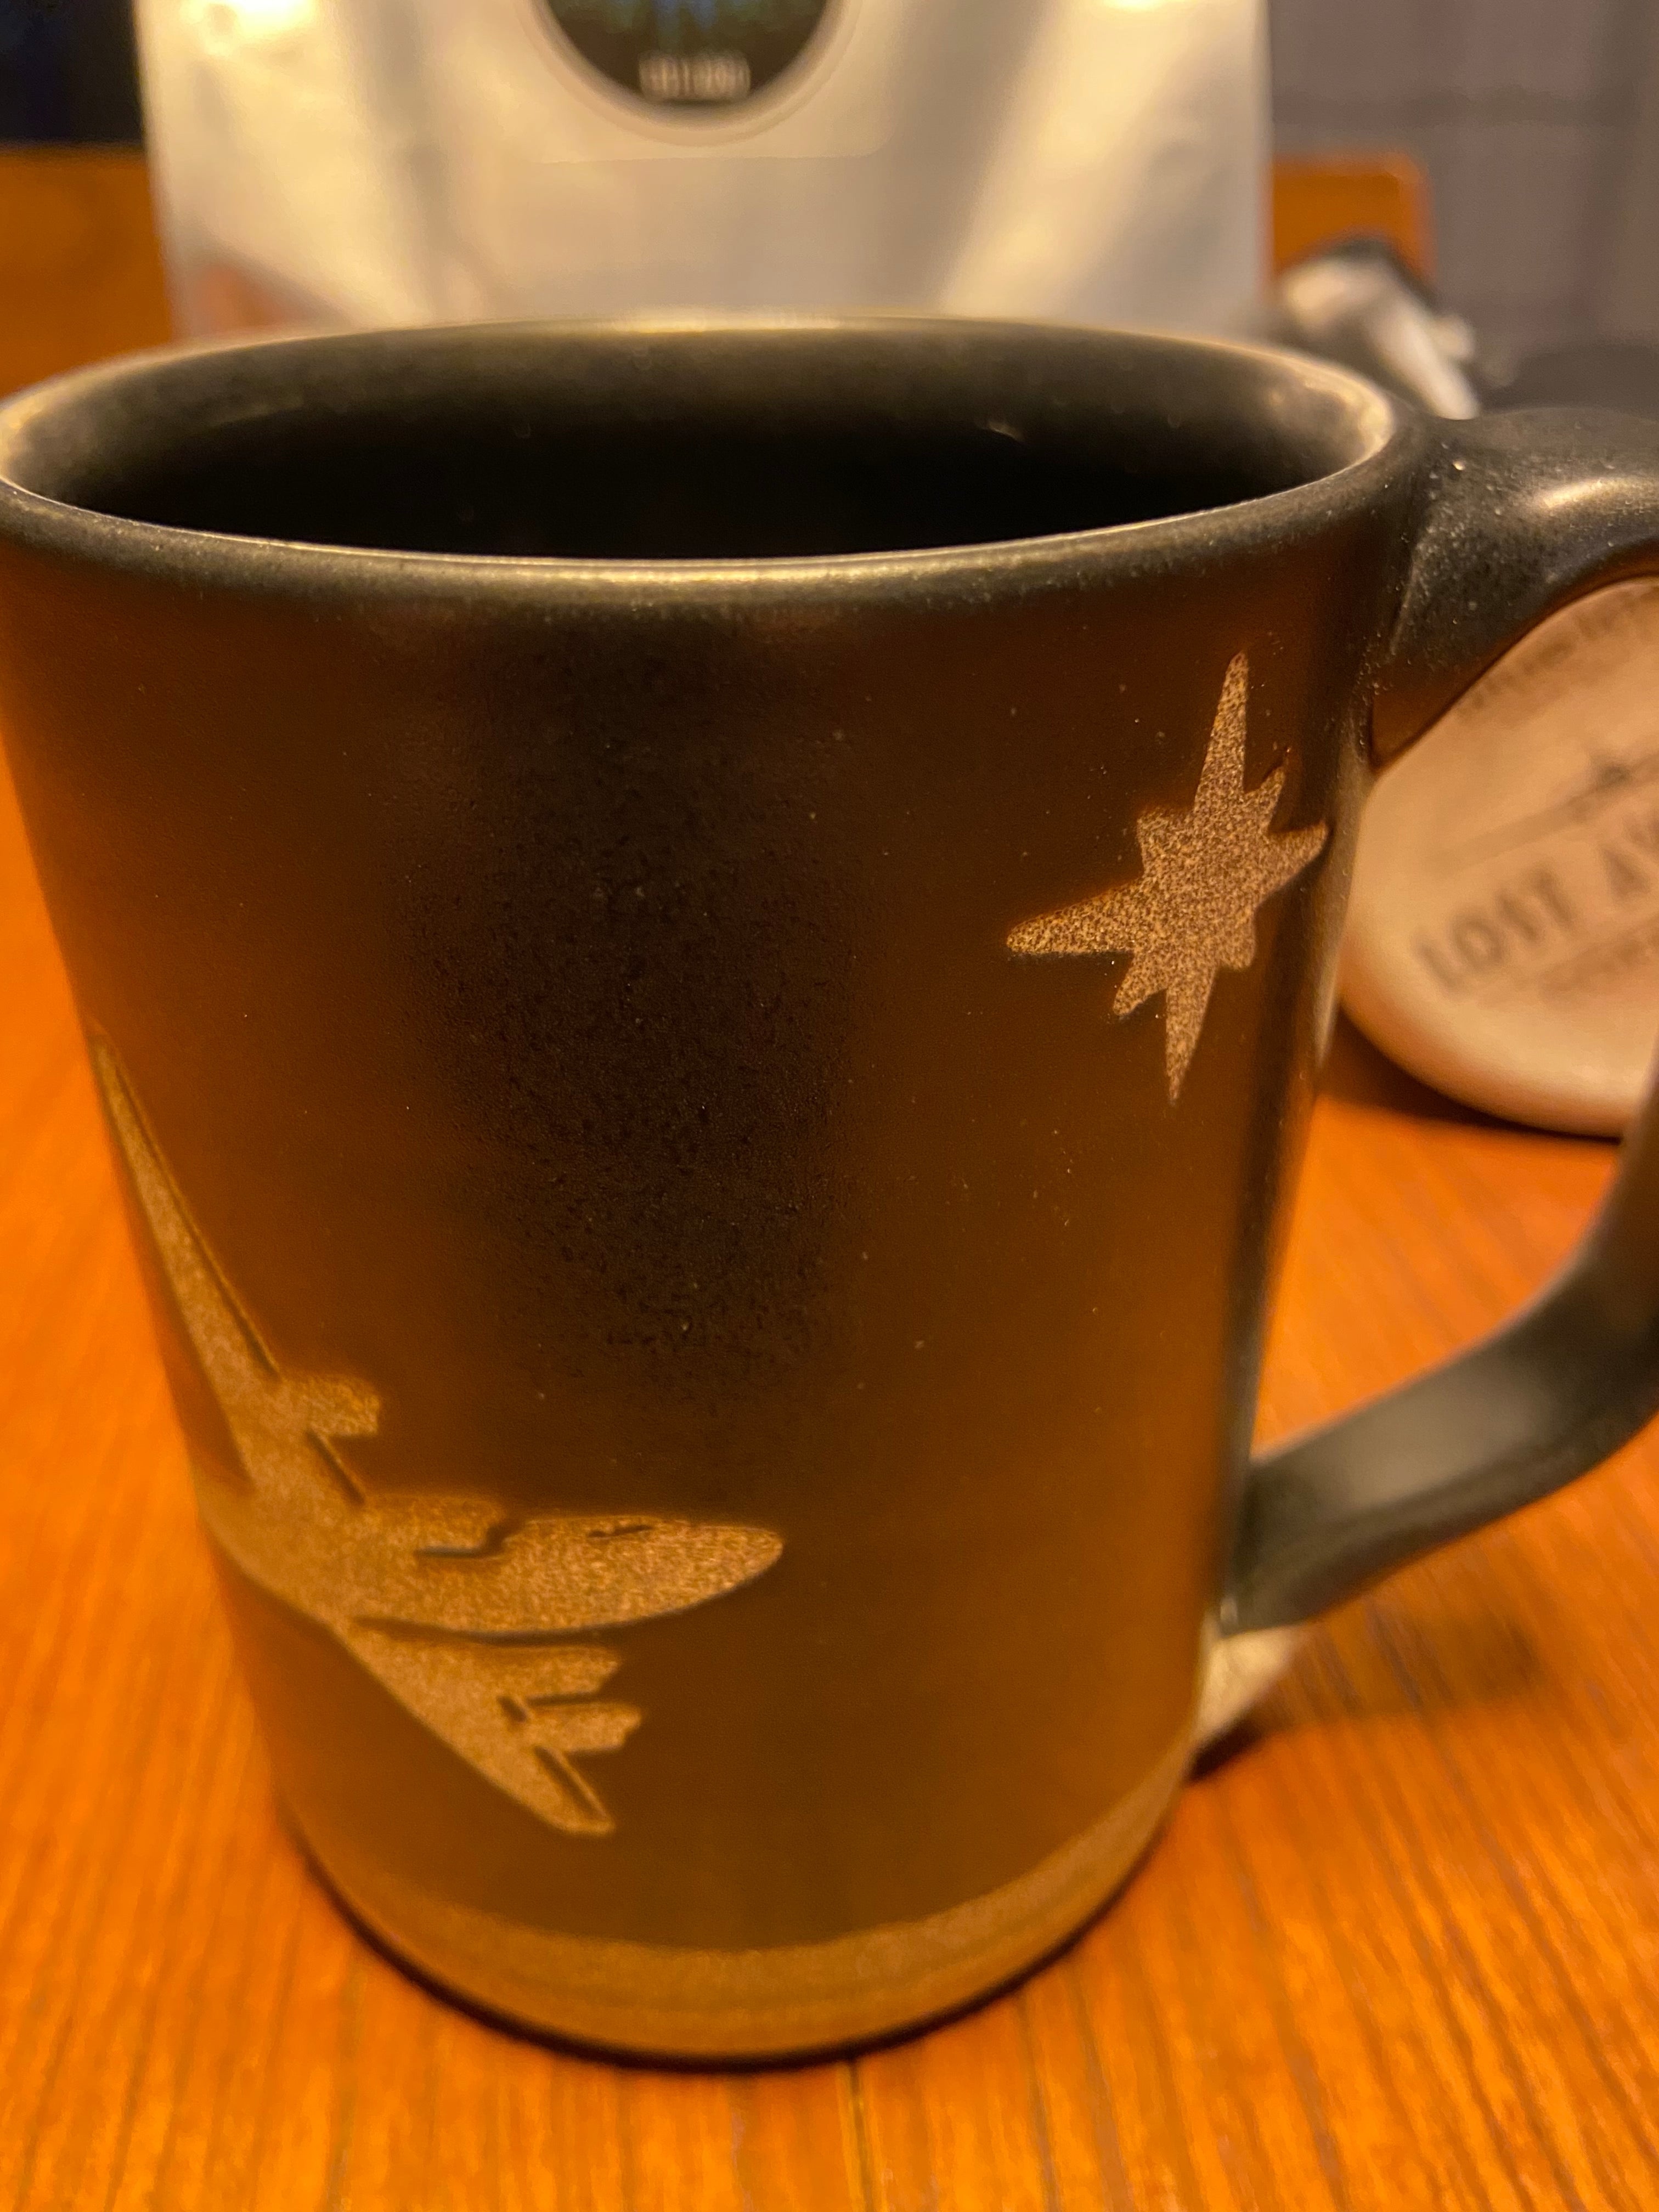 North Star - Handmade Mug